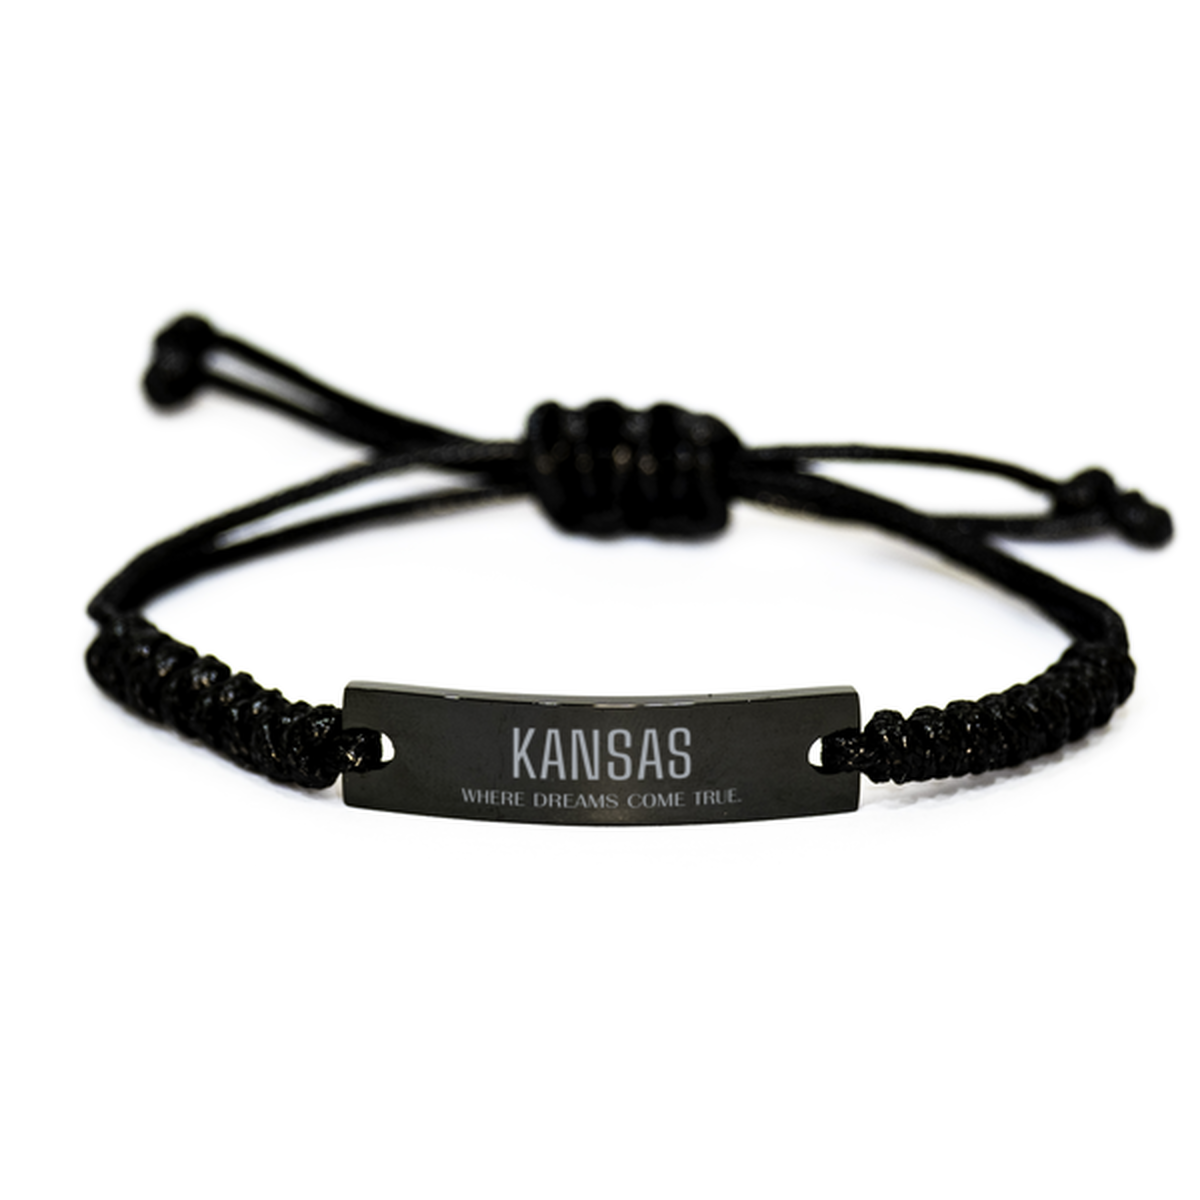 Love Kansas State Black Rope Bracelet, Kansas Where dreams come true, Birthday Inspirational Gifts For Kansas Men, Women, Friends